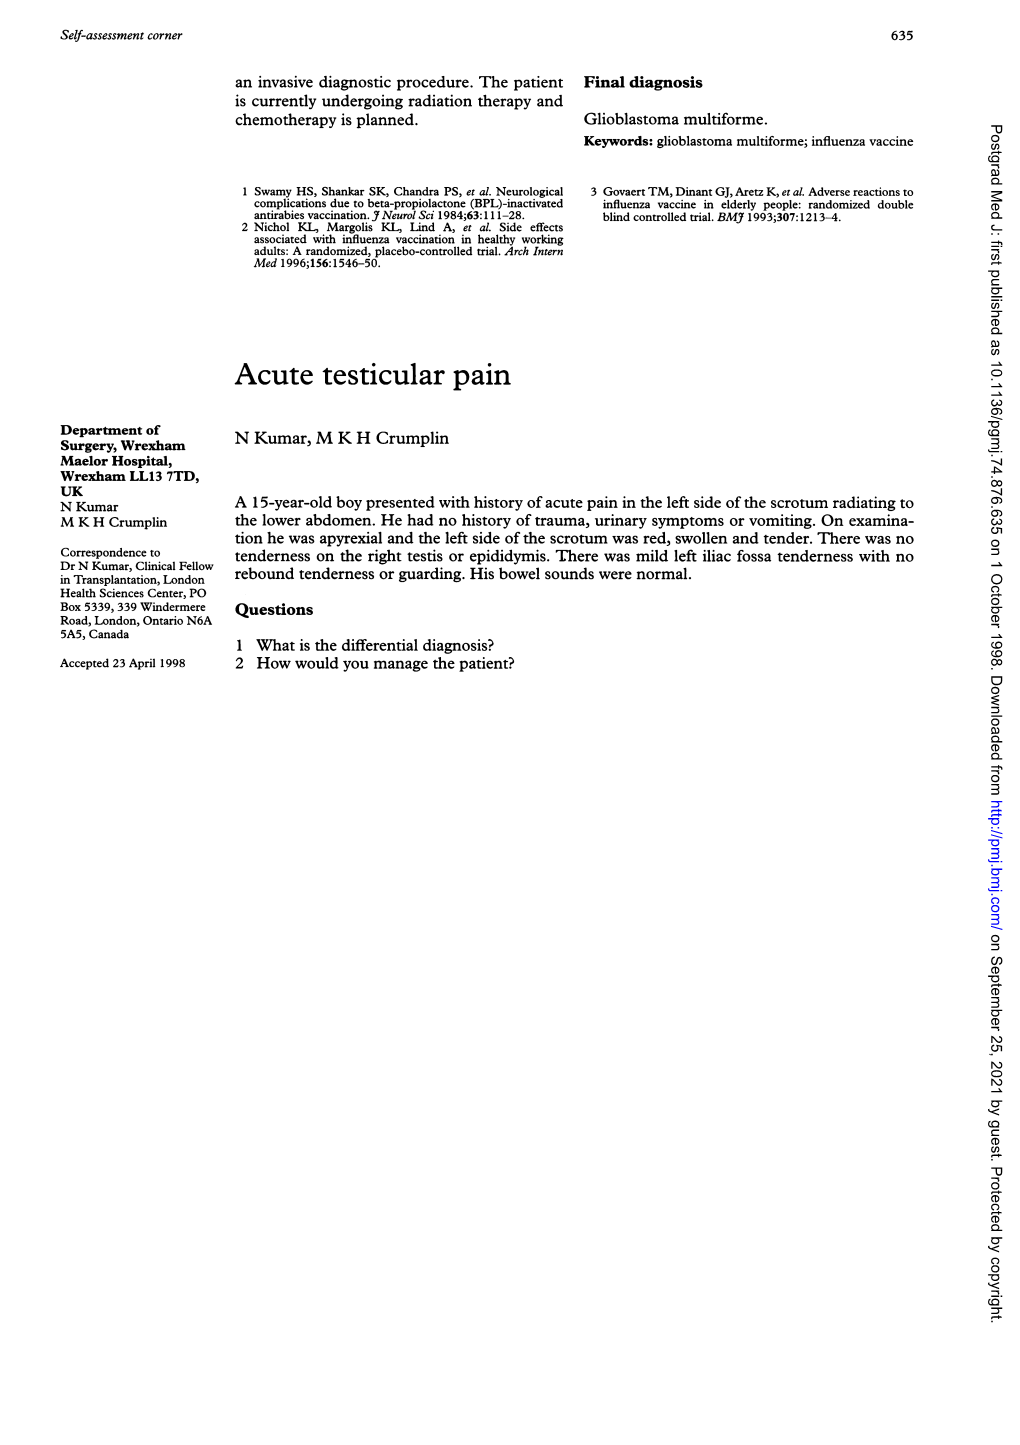 Acute Testicular Pain